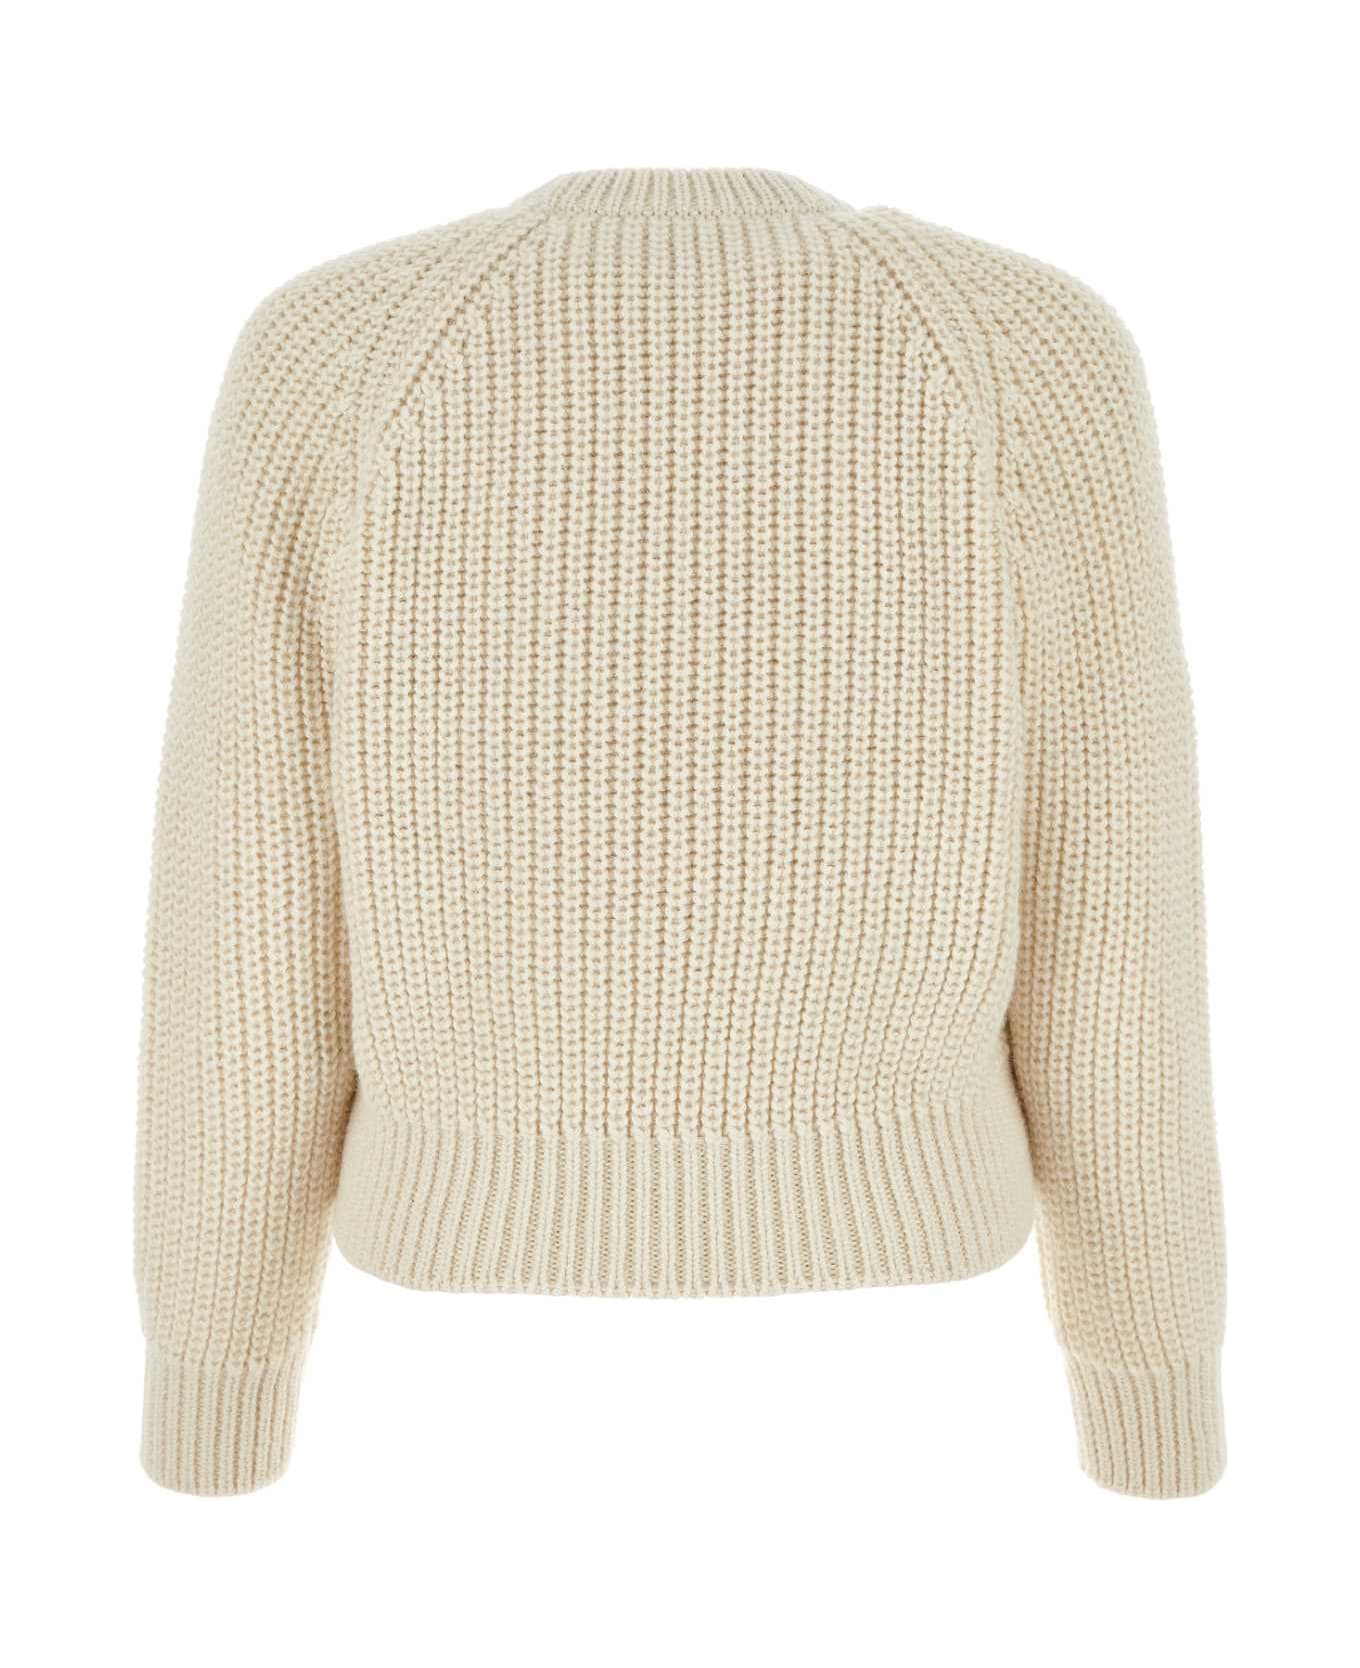 Prada Ivory Shearling And Alpaca Sweater - BIANCO